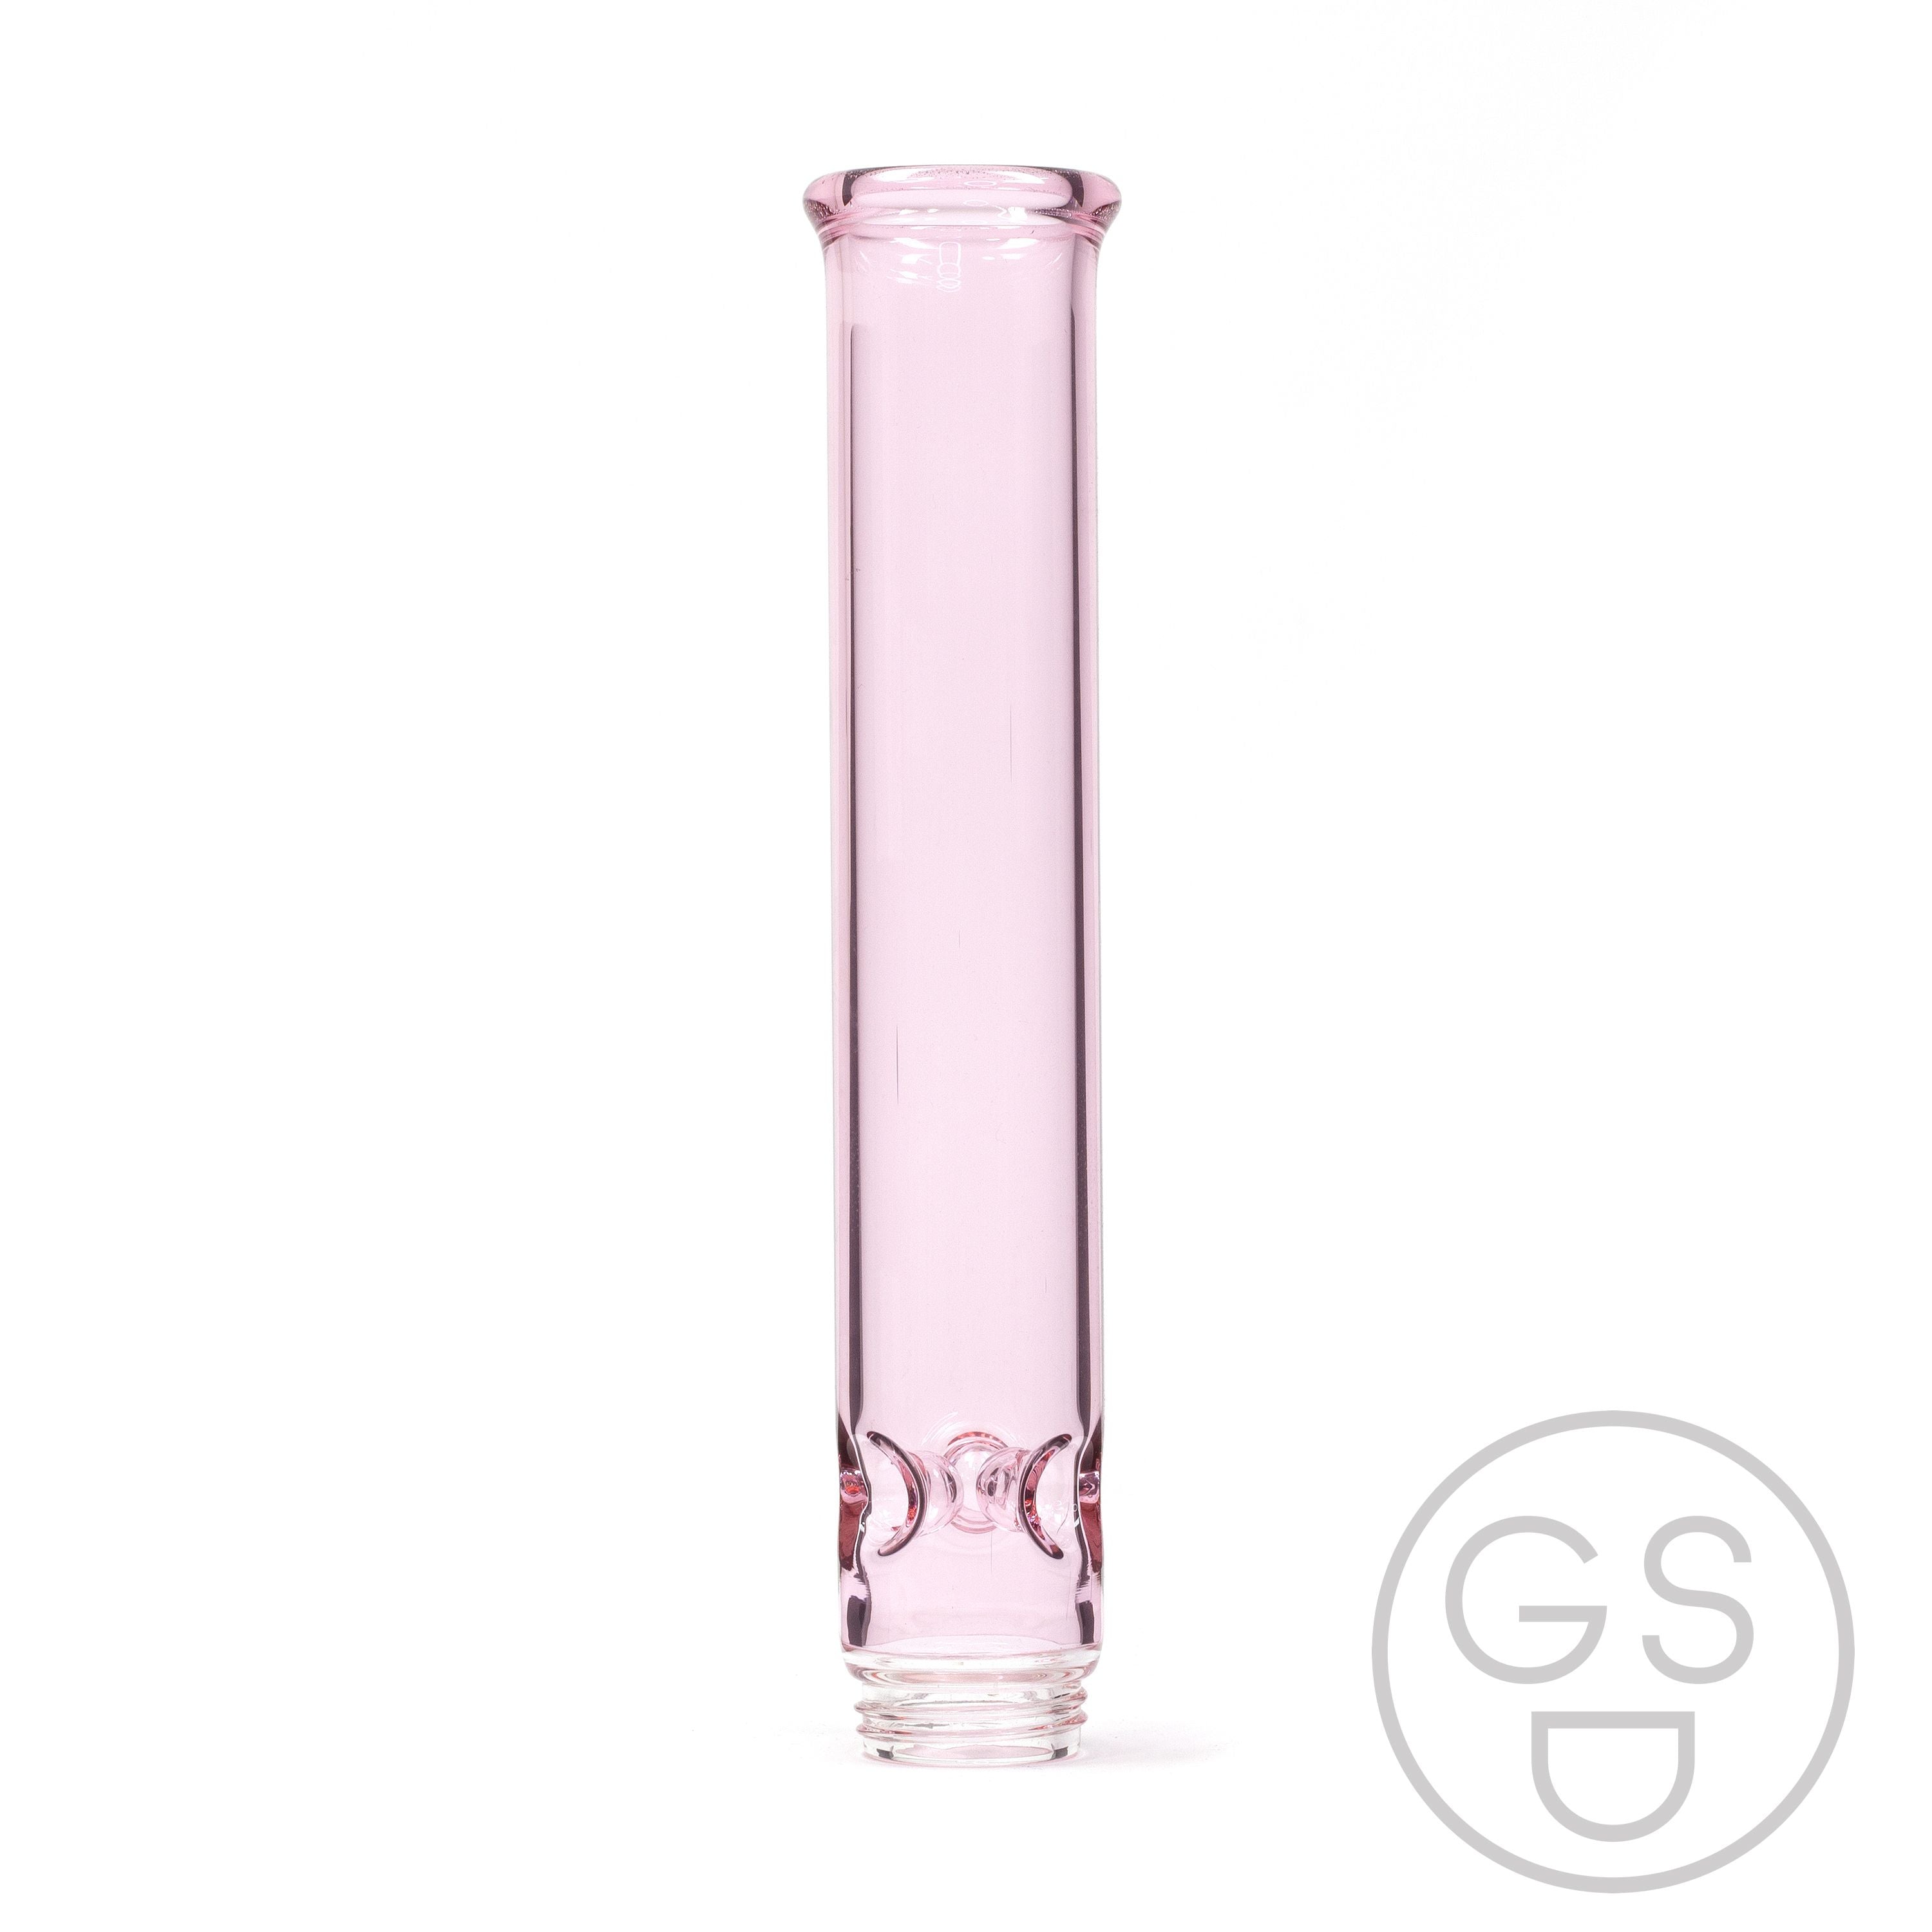 Prism Modular Waterpipe Tall Mouthpiece - Transparent / Pink Lemonade